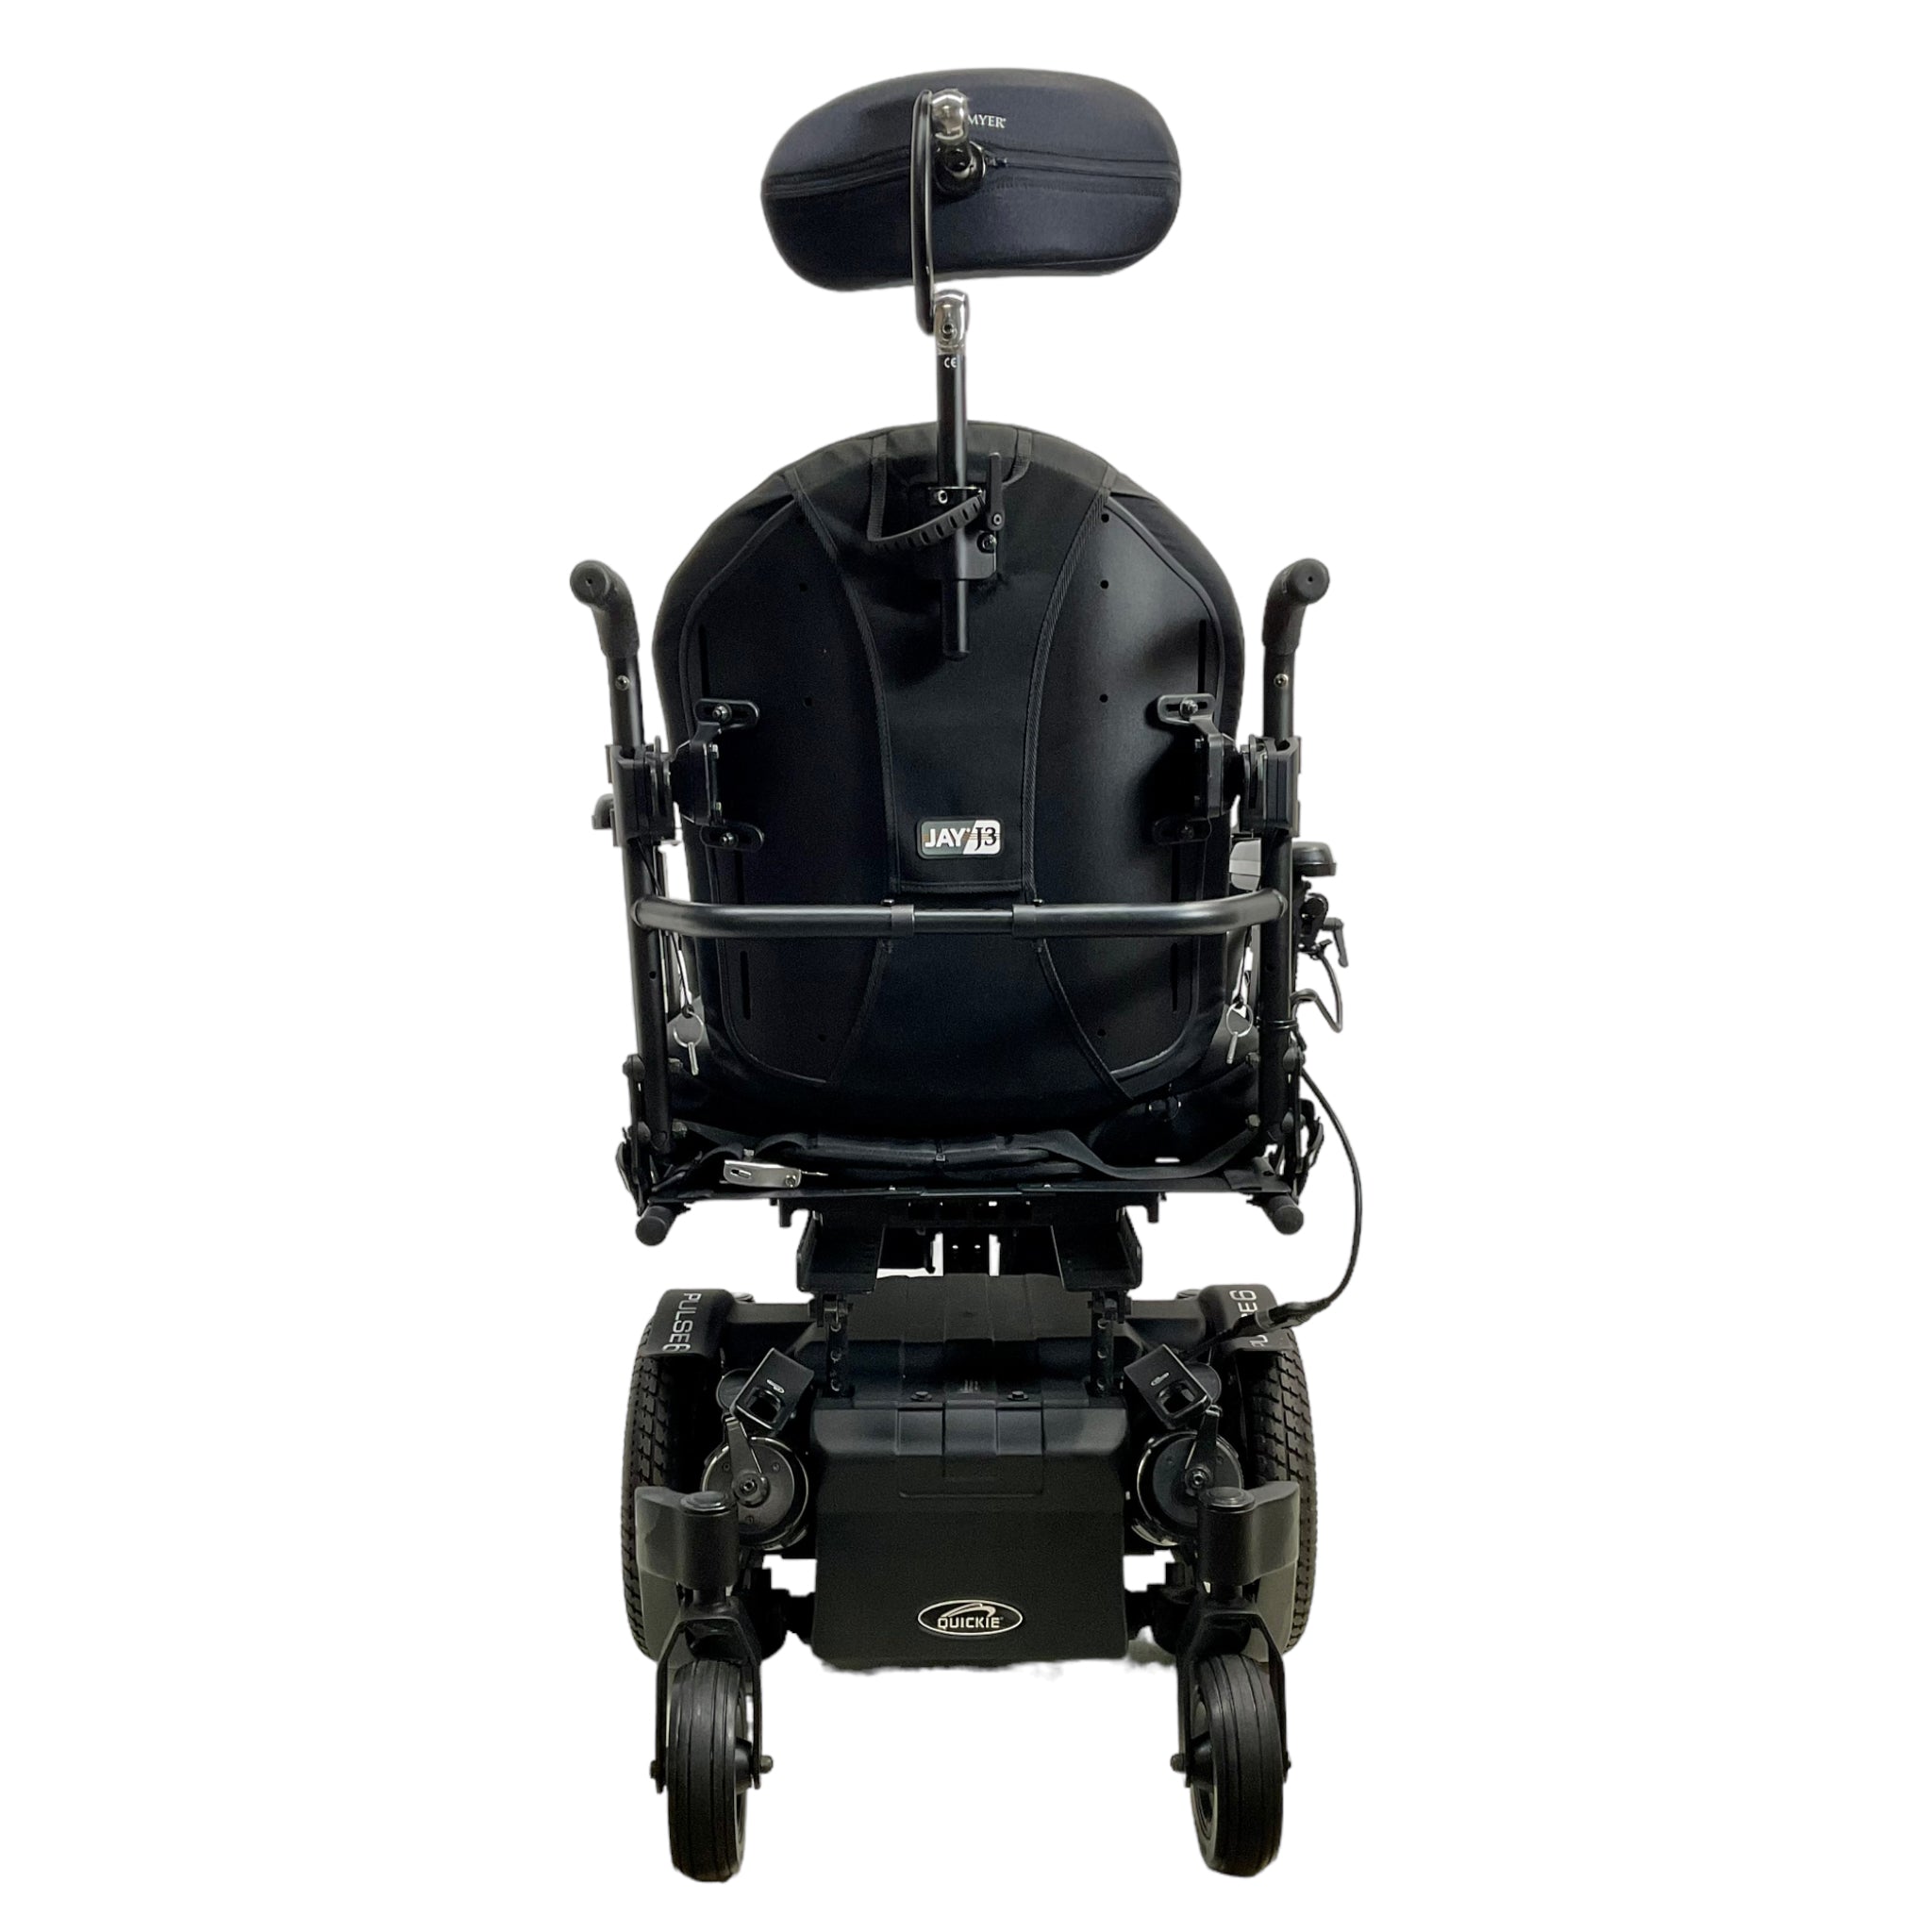 Jay J3 Wheelchair Cushion